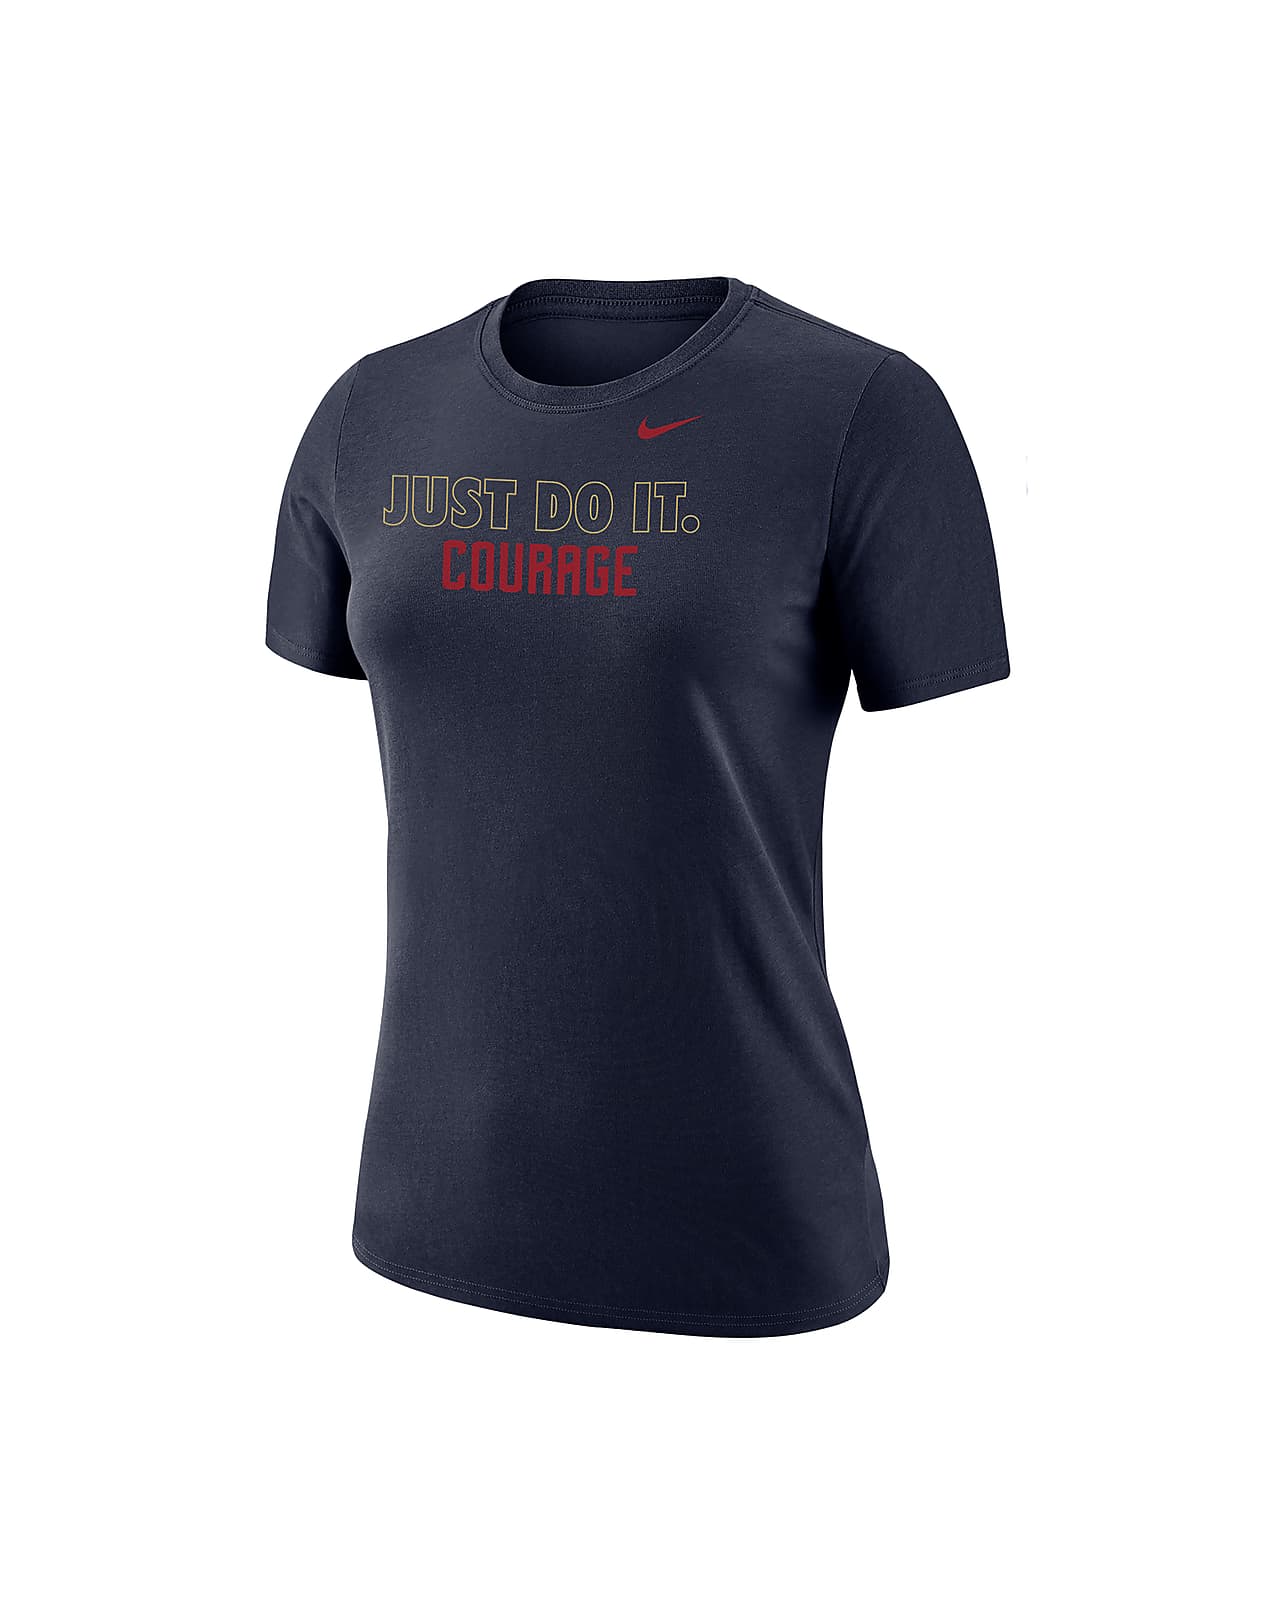 North Carolina Courage Women's Nike Soccer T-Shirt